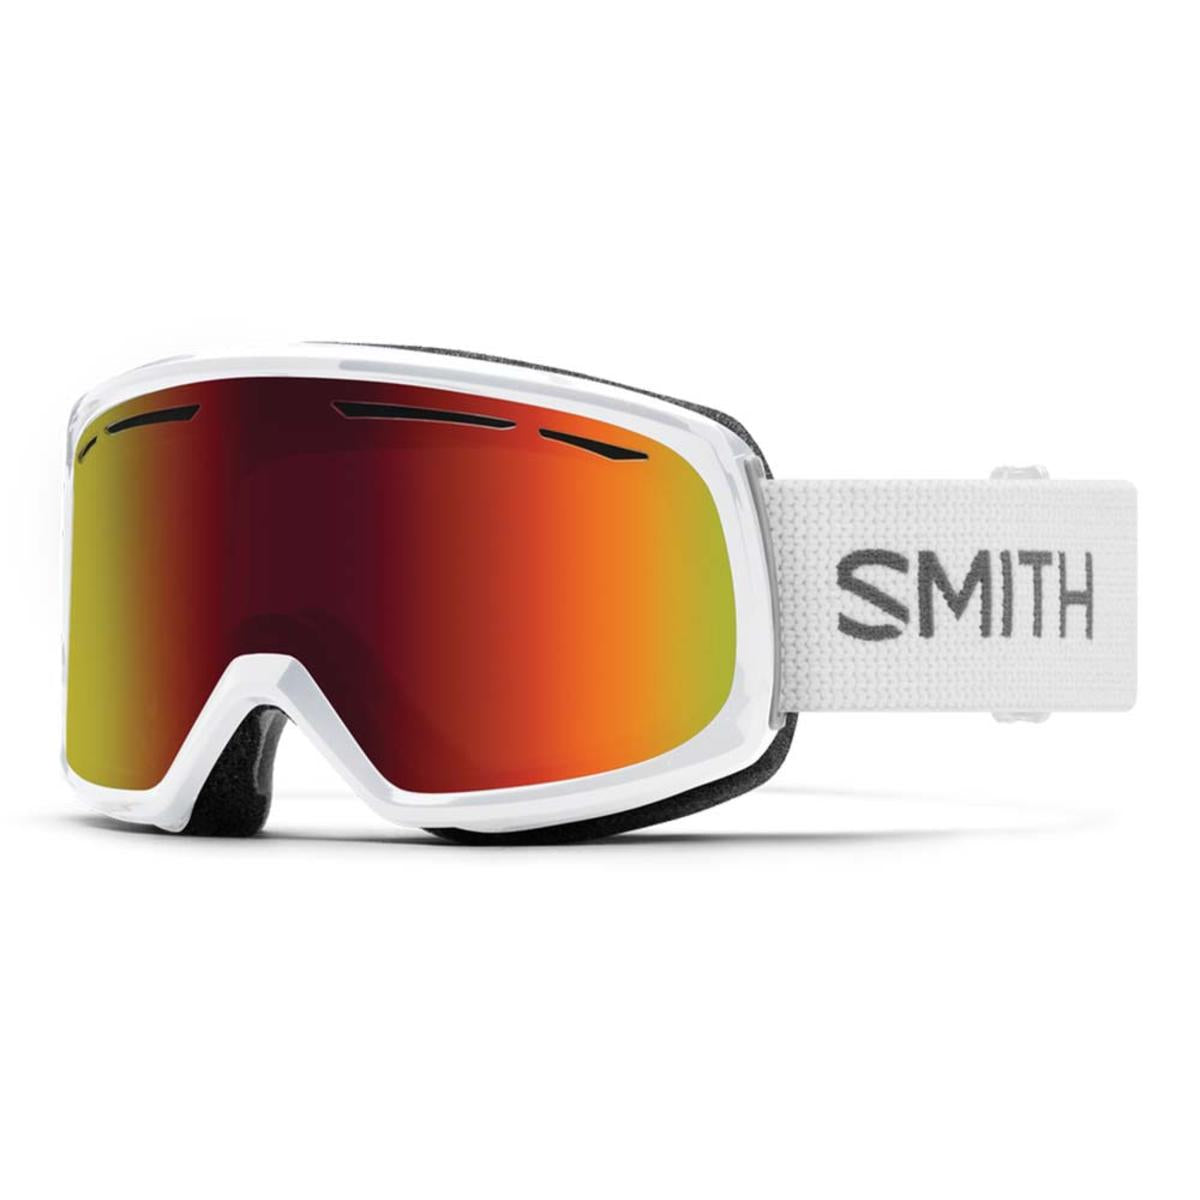 Smith Optics Drift Goggles Red Sol-X Mirror - White Frame